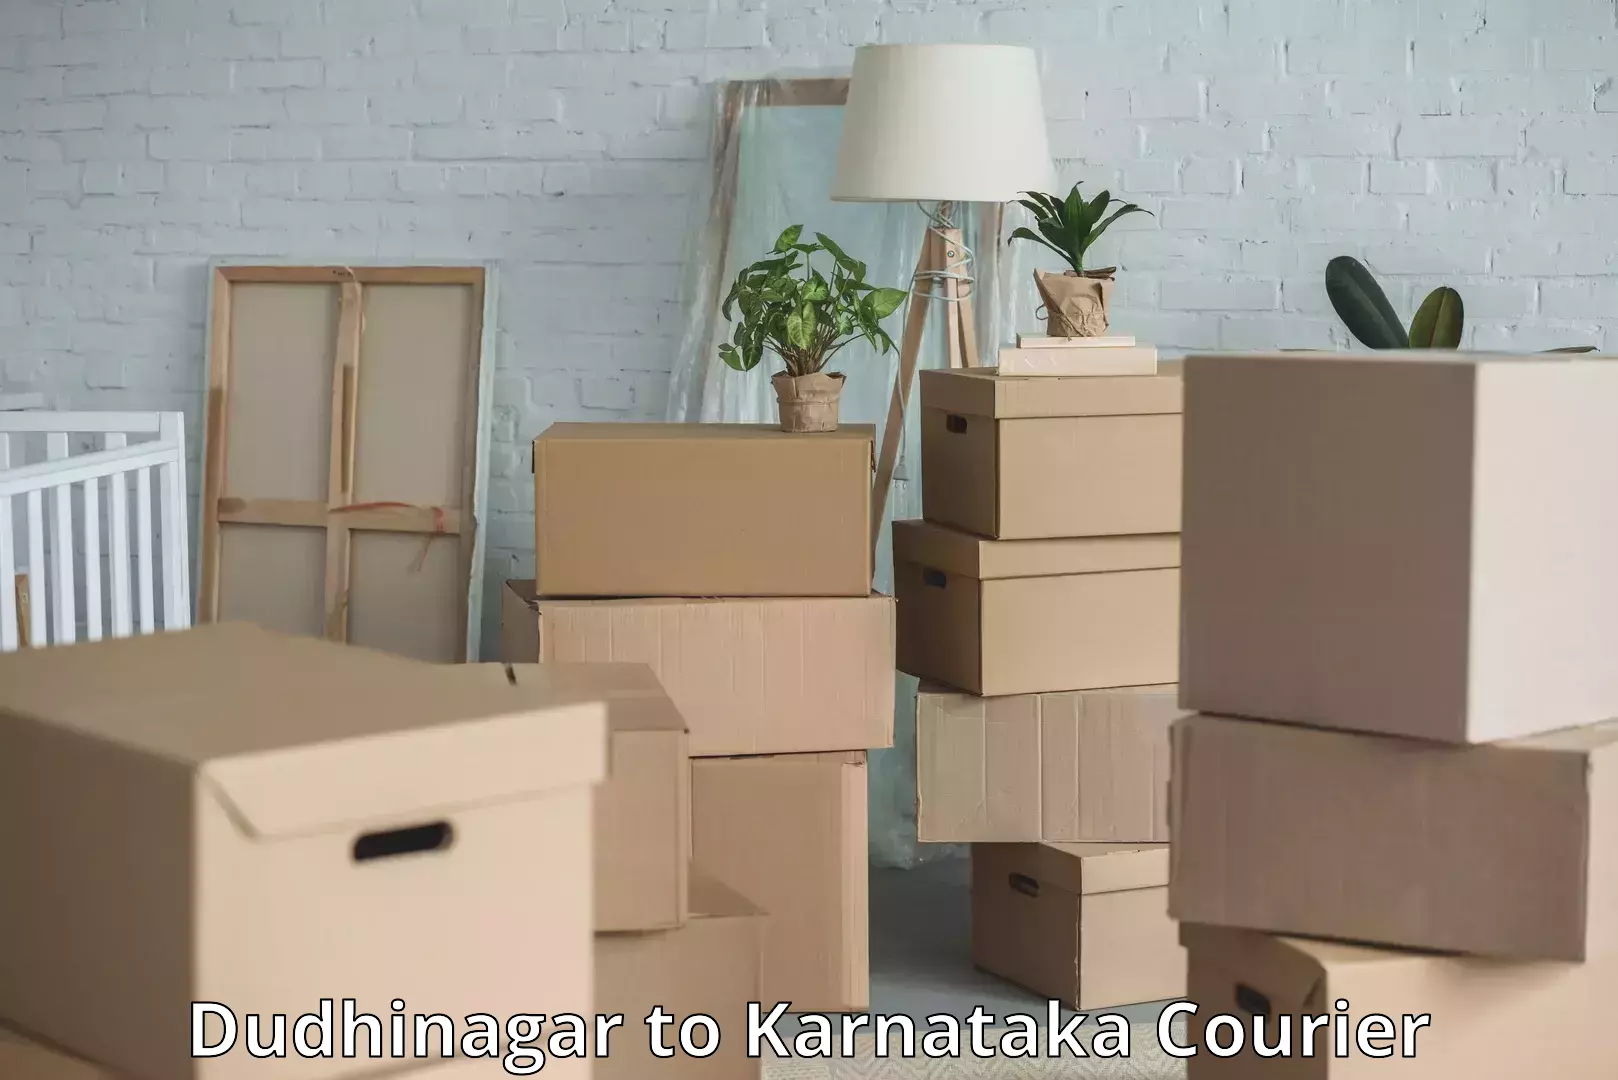 Luggage delivery providers Dudhinagar to Karnataka